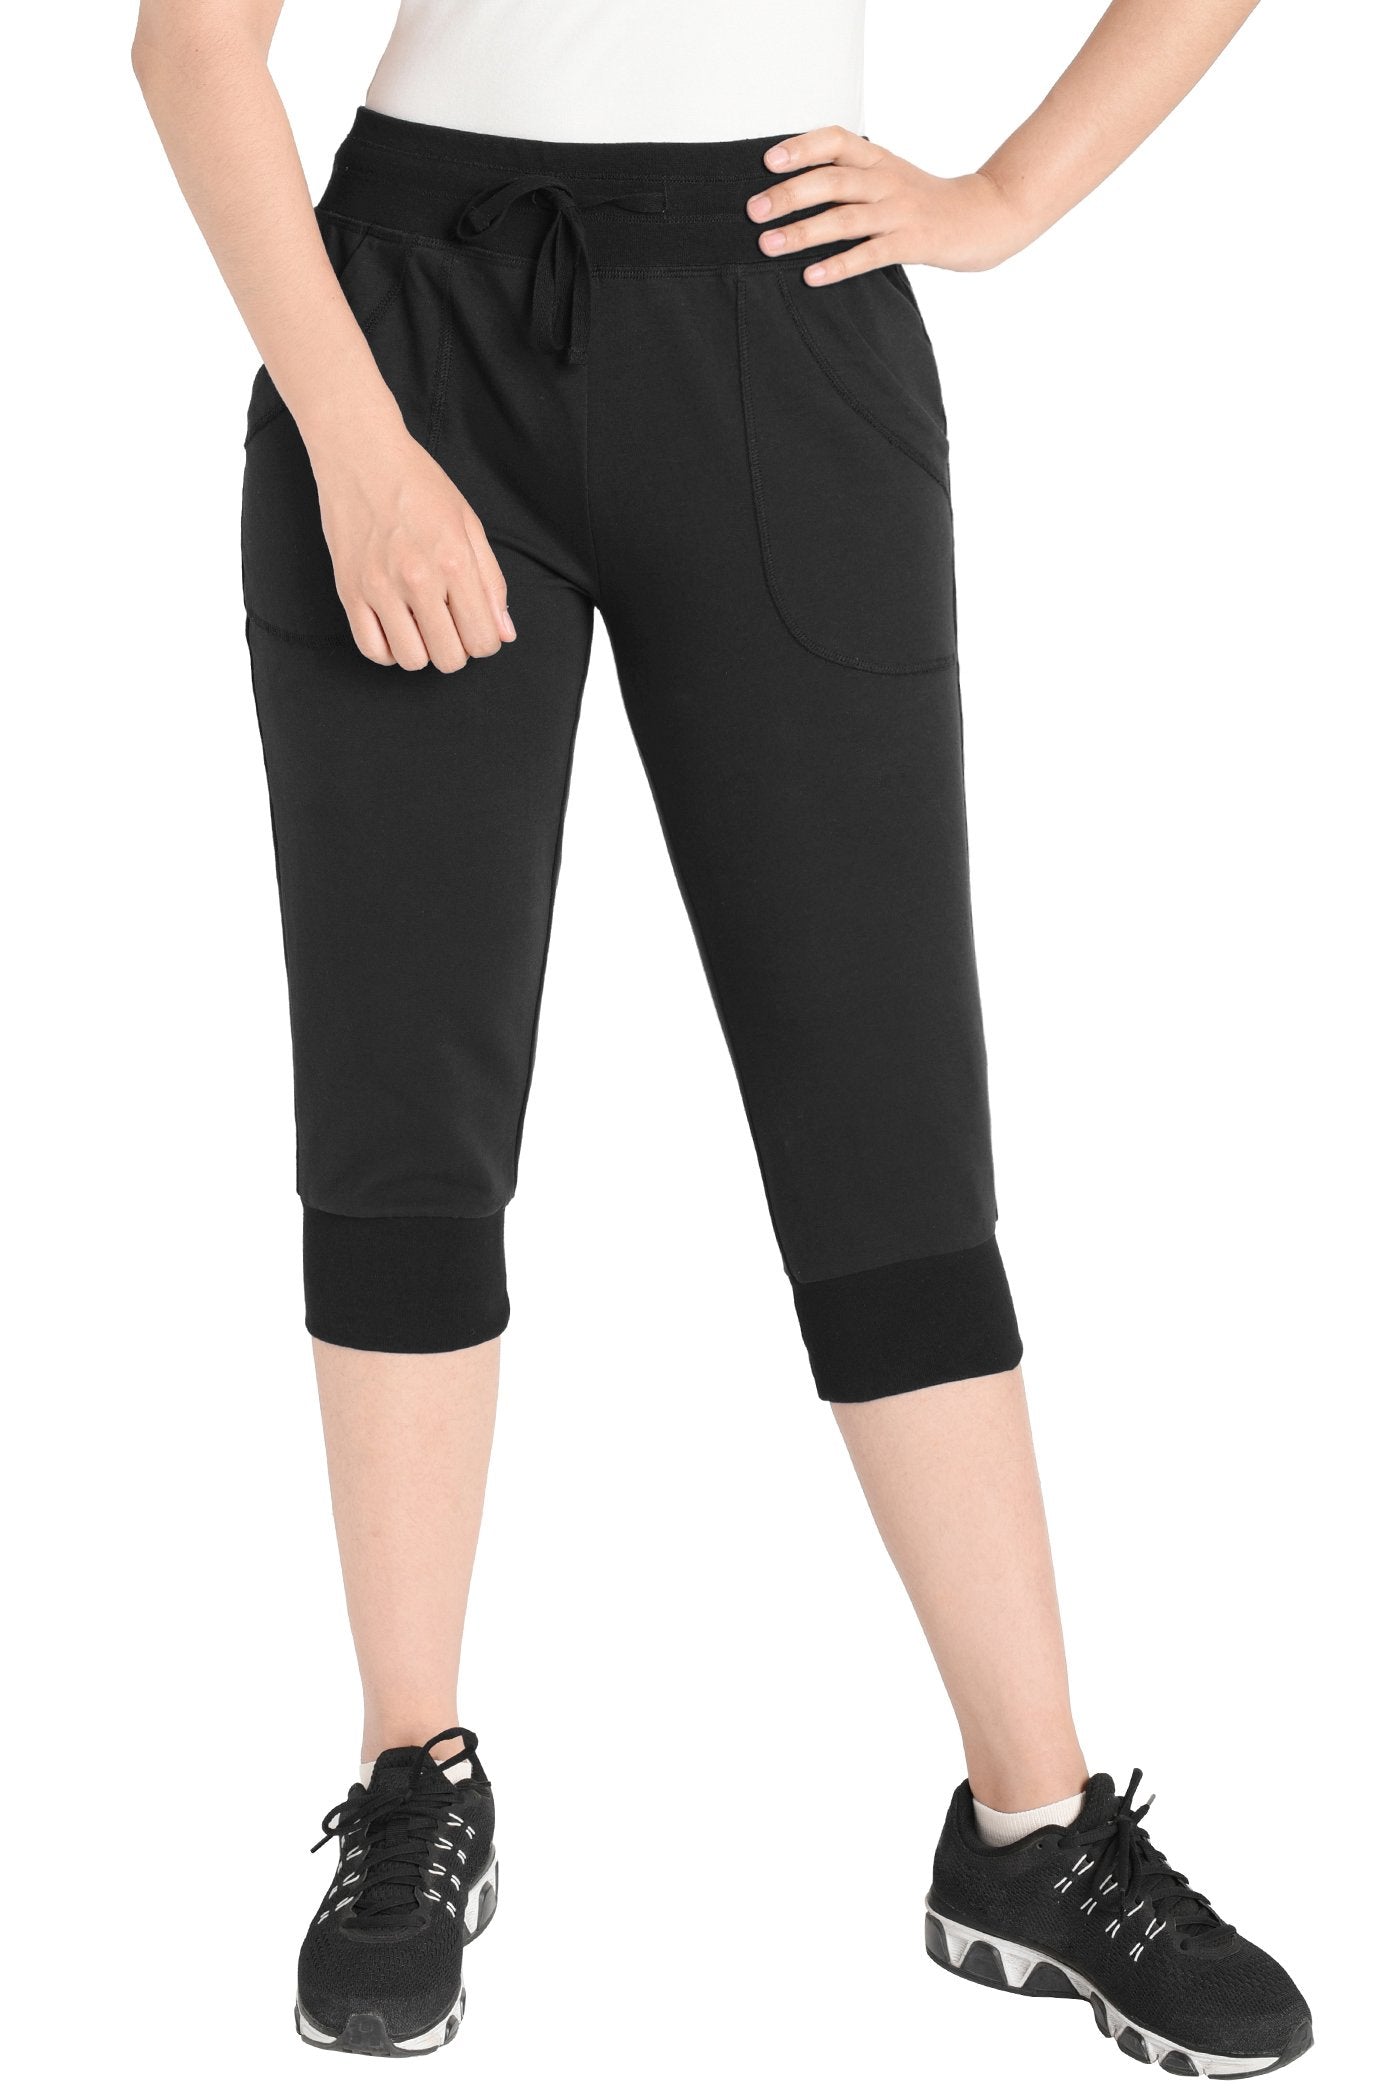 Buy THANTH Womens Capri Yoga Pants Loose Comfy Lounge Pajamas Workout  Athletic Capris Jersey Joggers Pants with Pockets Darkgrey L at